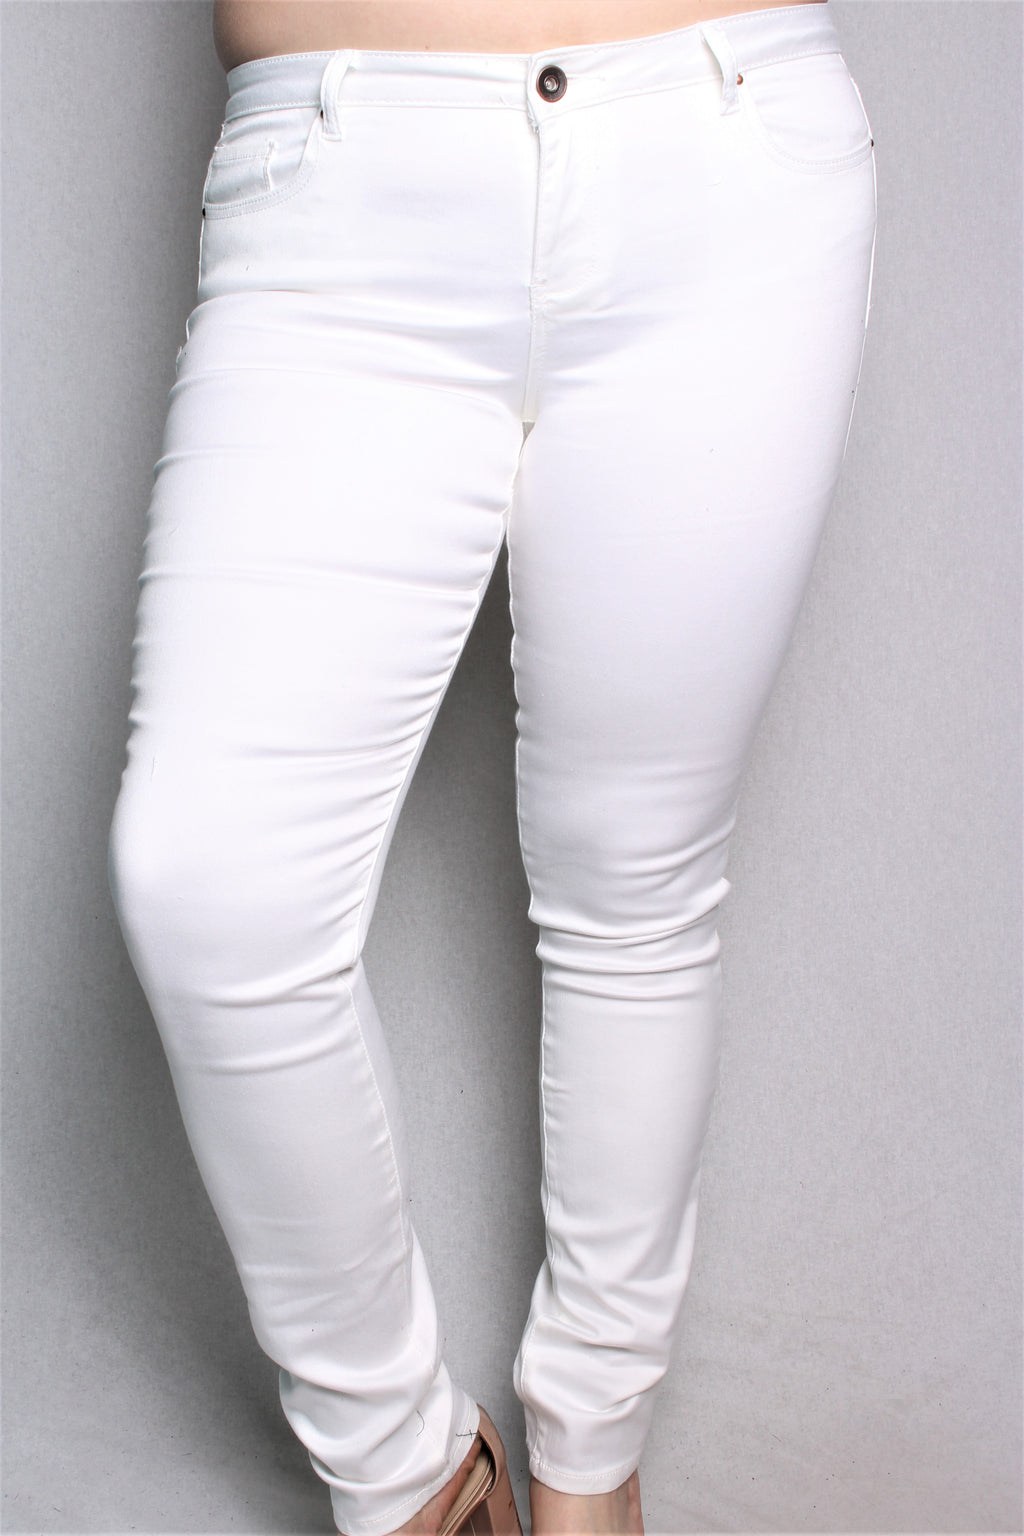 Women's Plus Size White Skinny Jeans (Length 35)